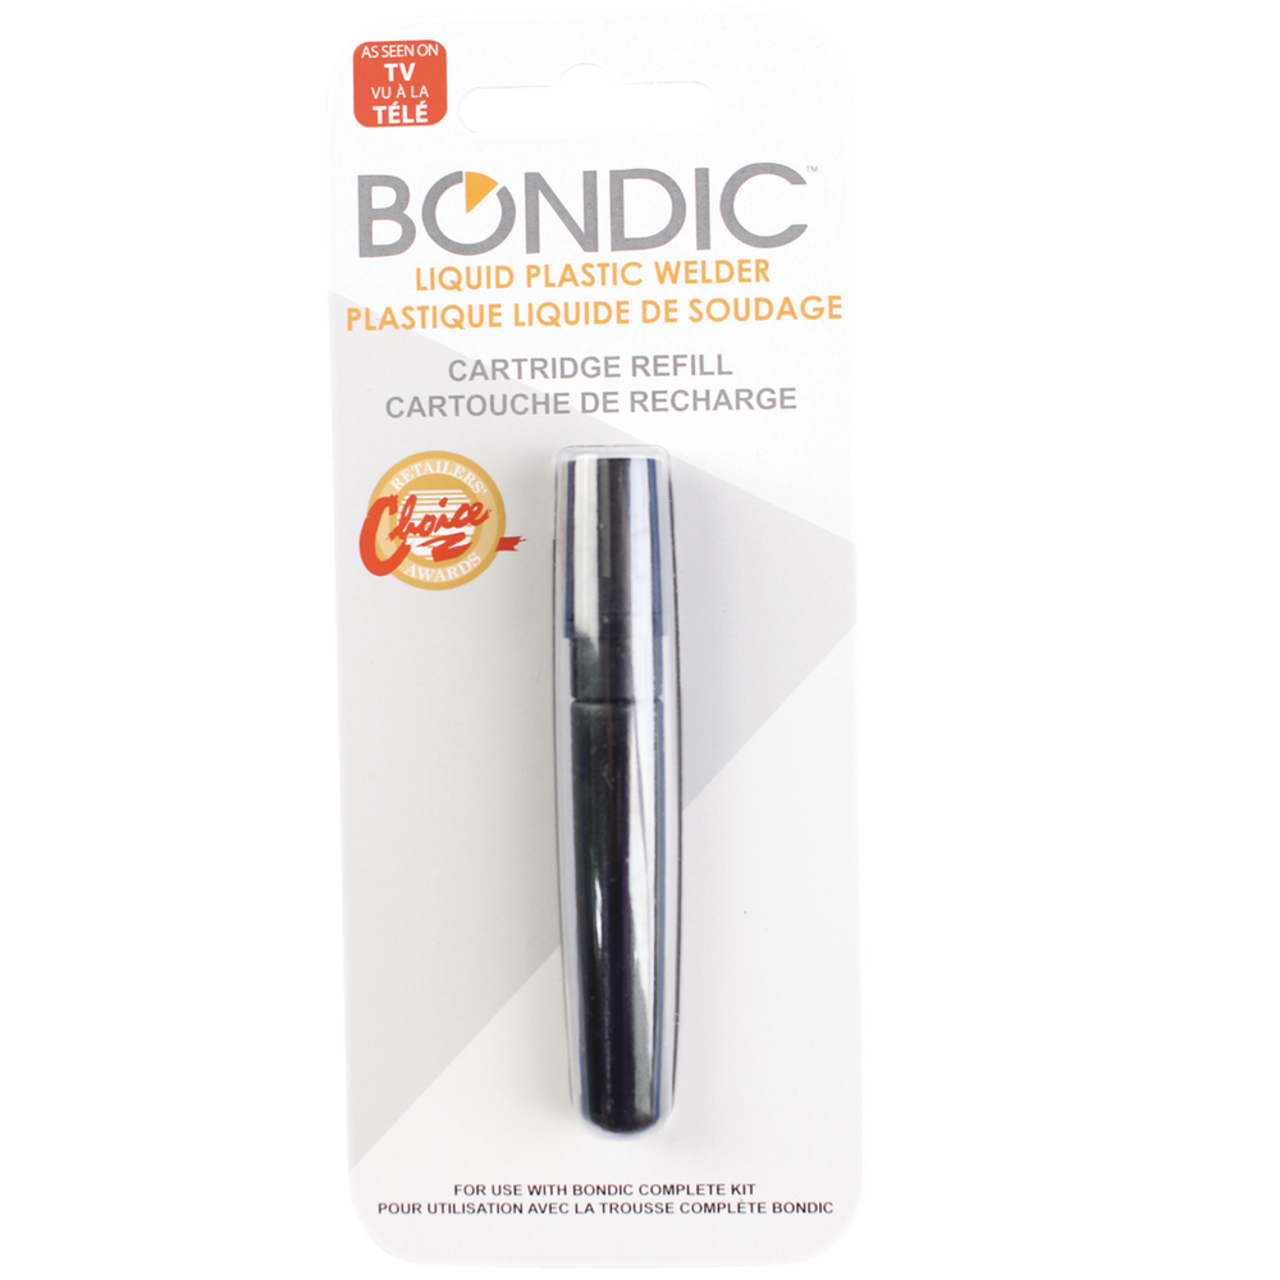 Bondic® - It's Not a Glue